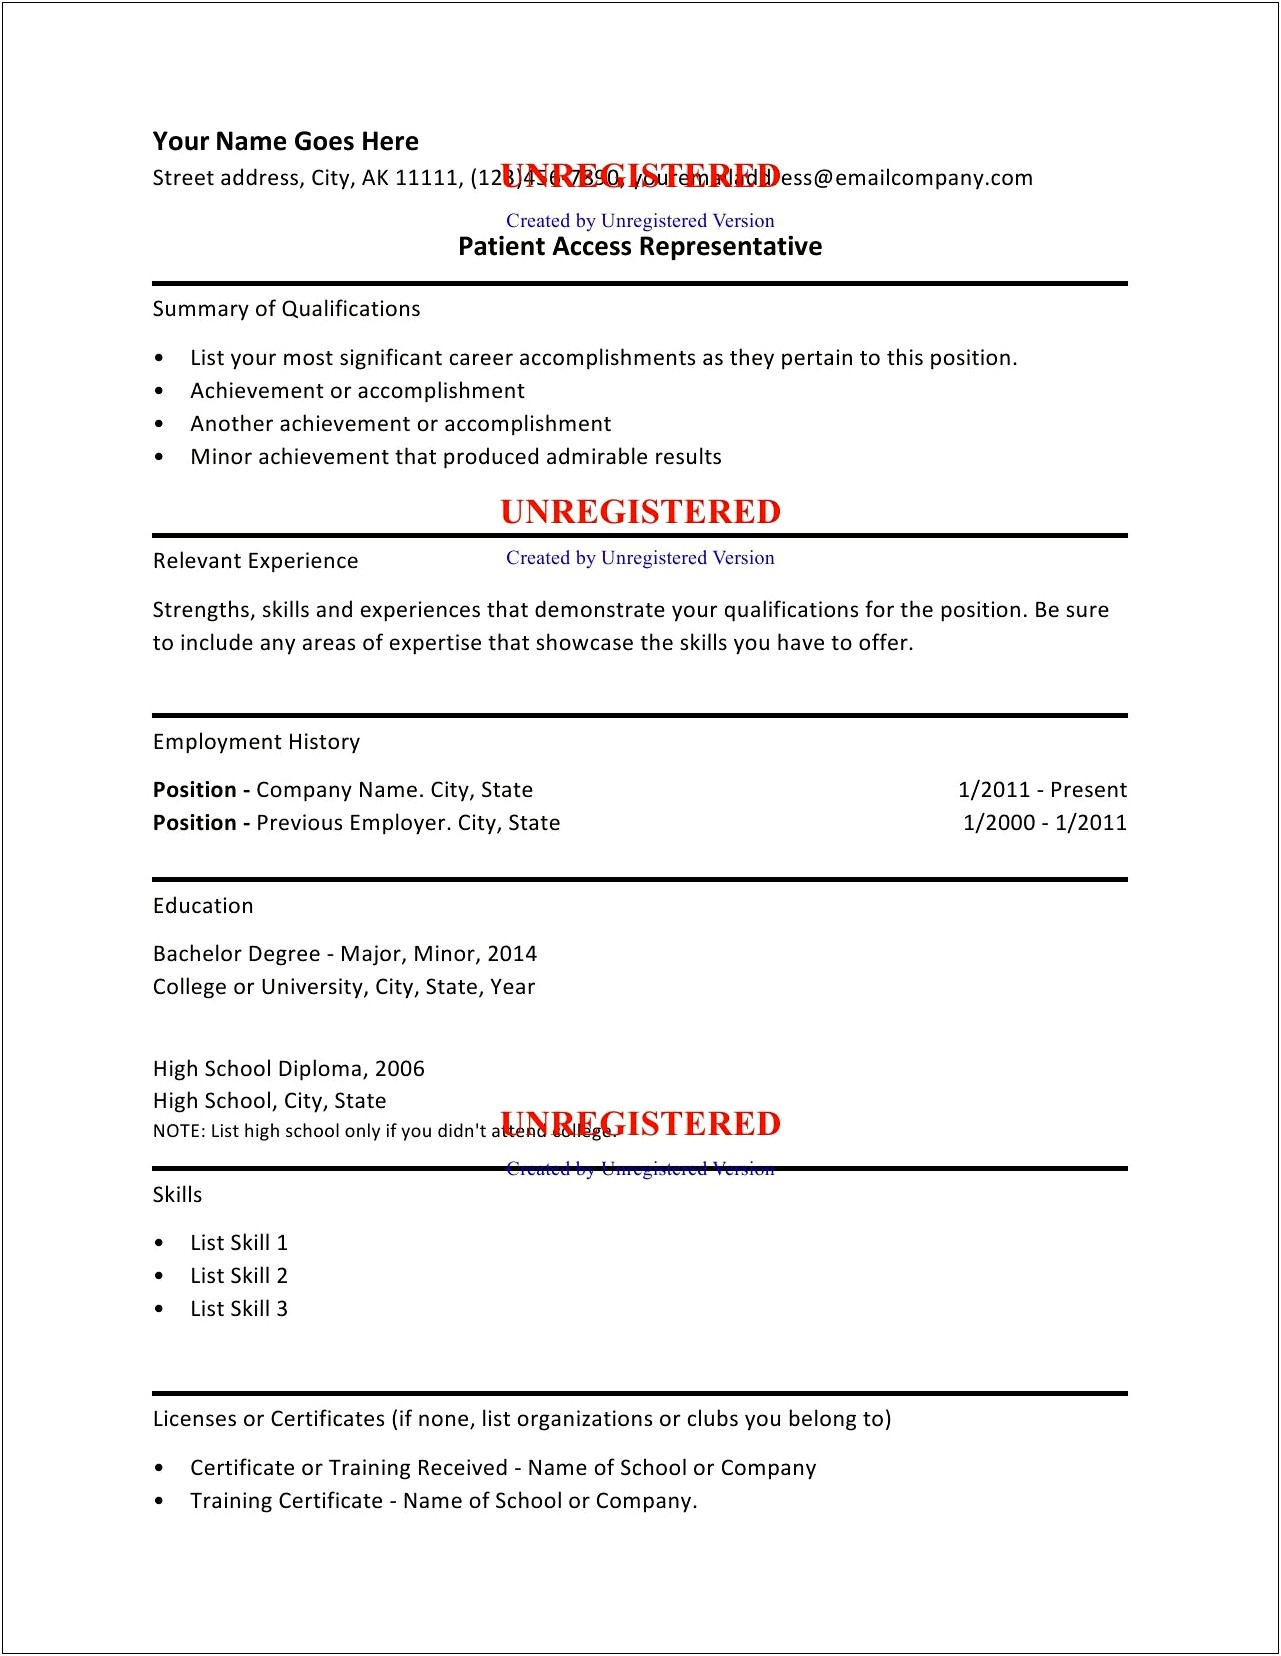 Patient Access Representative Resume Objective